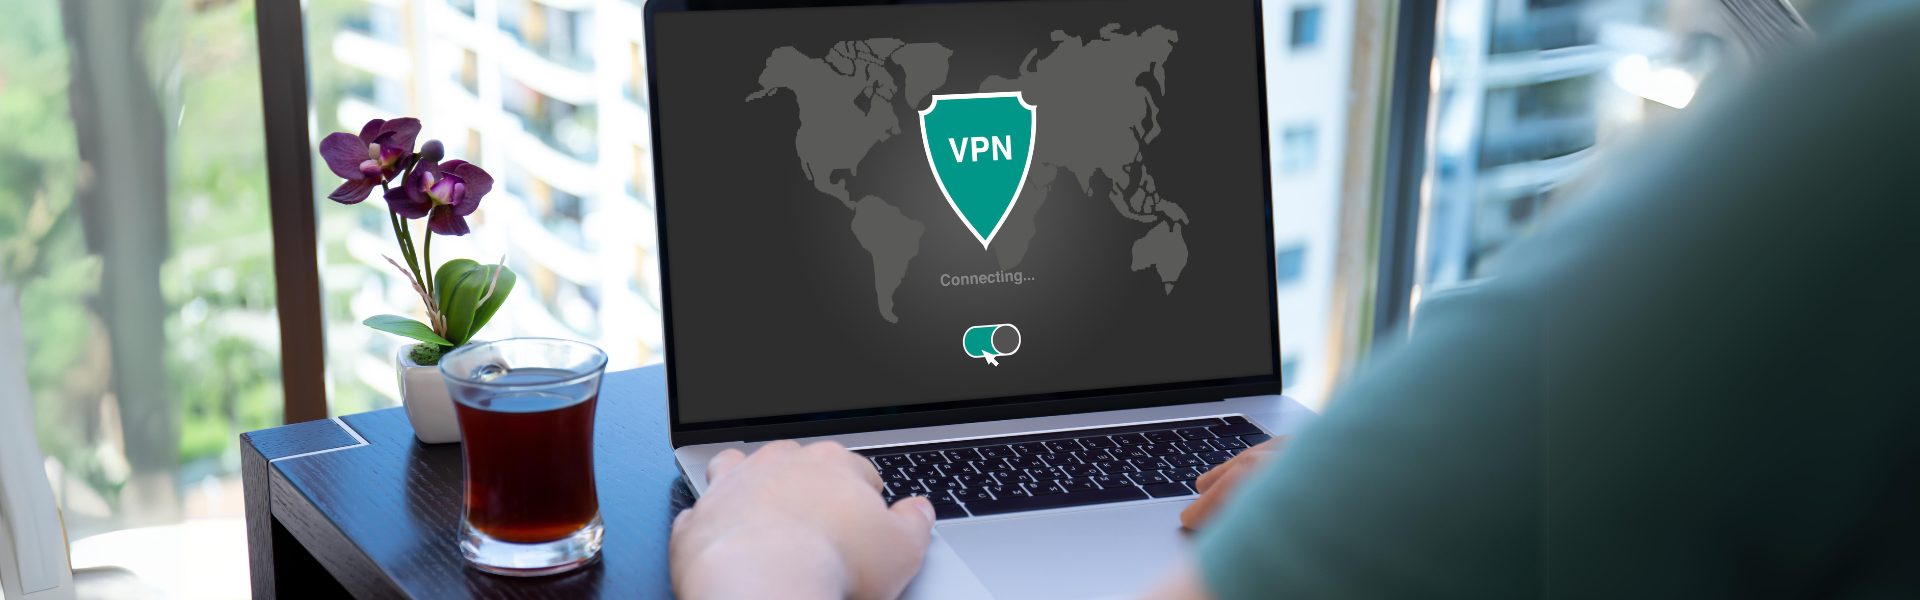 Benefits of Using VPN on Hotel WiFi